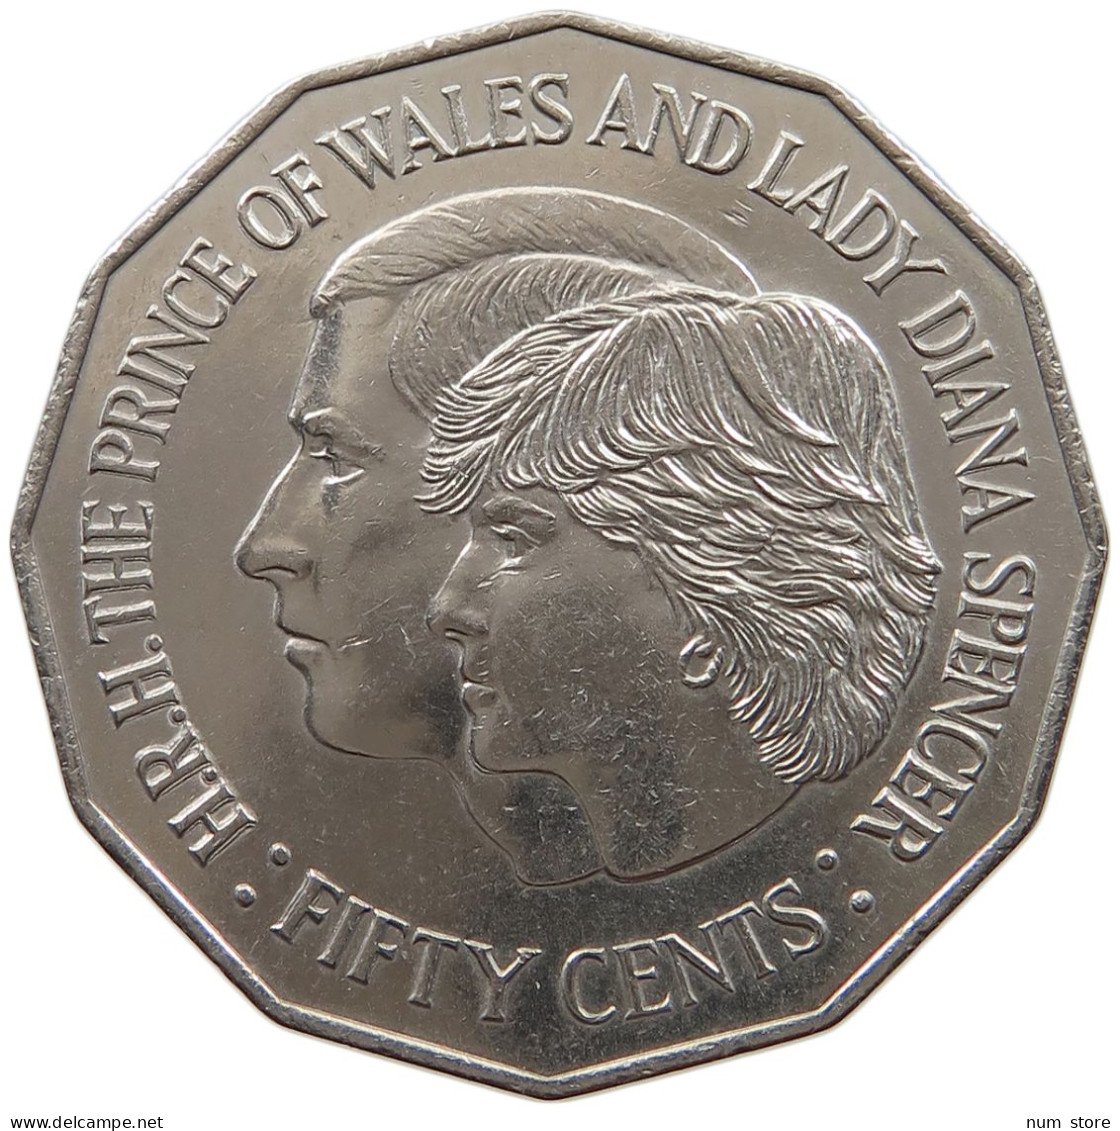 AUSTRALIA 50 CENTS 1981 Elisabeth II. (1952-) #a071 0677 - 50 Cents